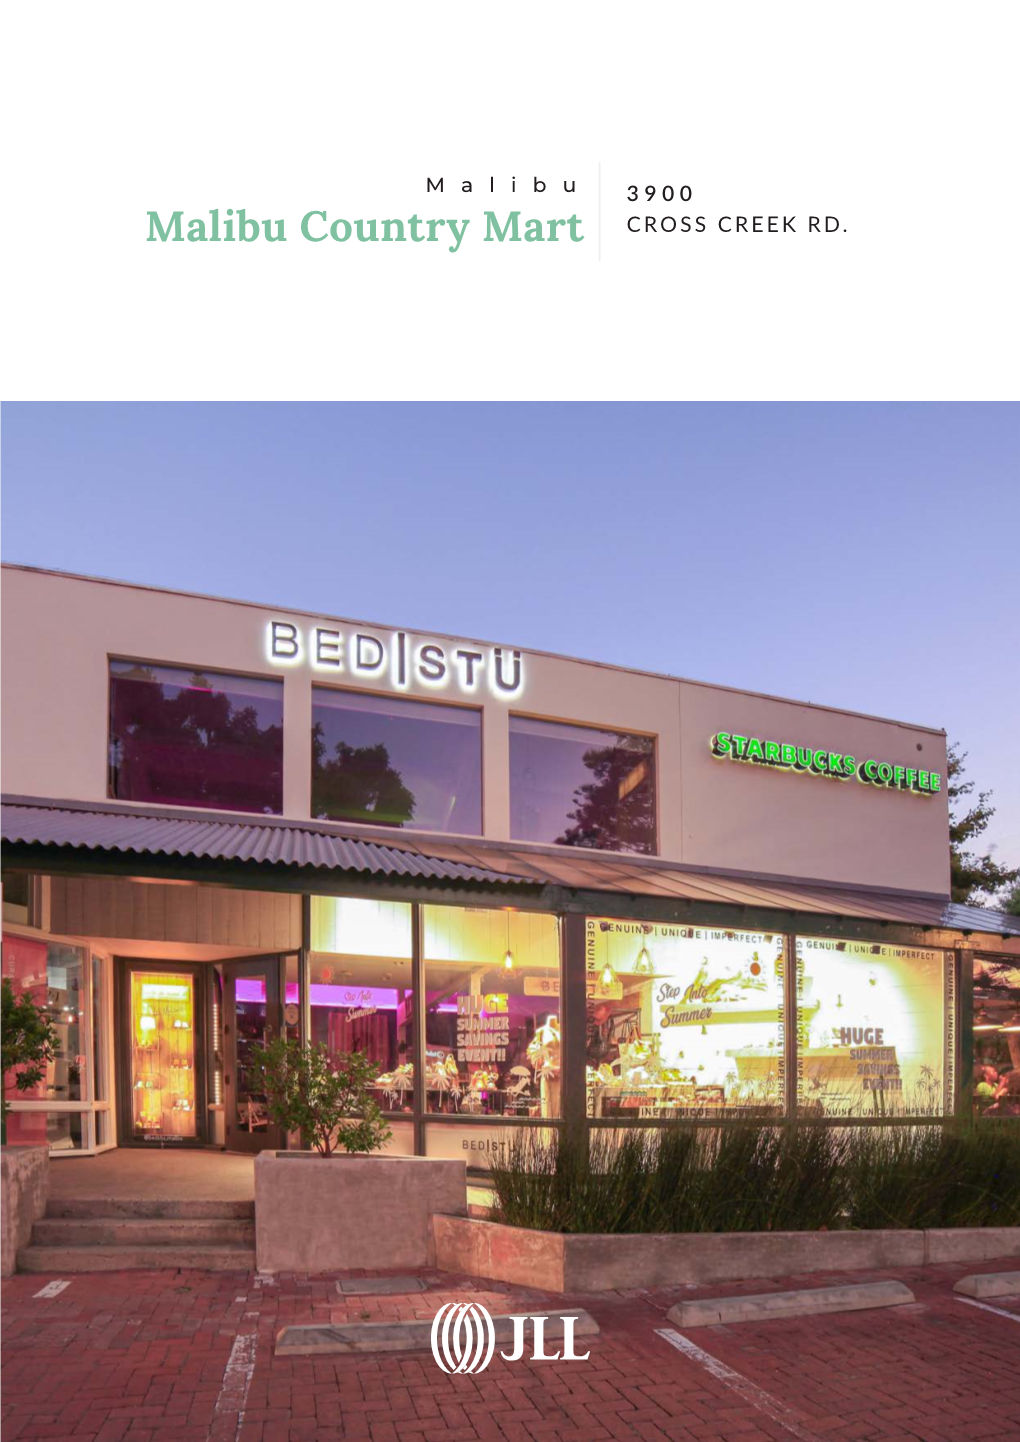 Malibu Country Mart CROSS CREEK RD